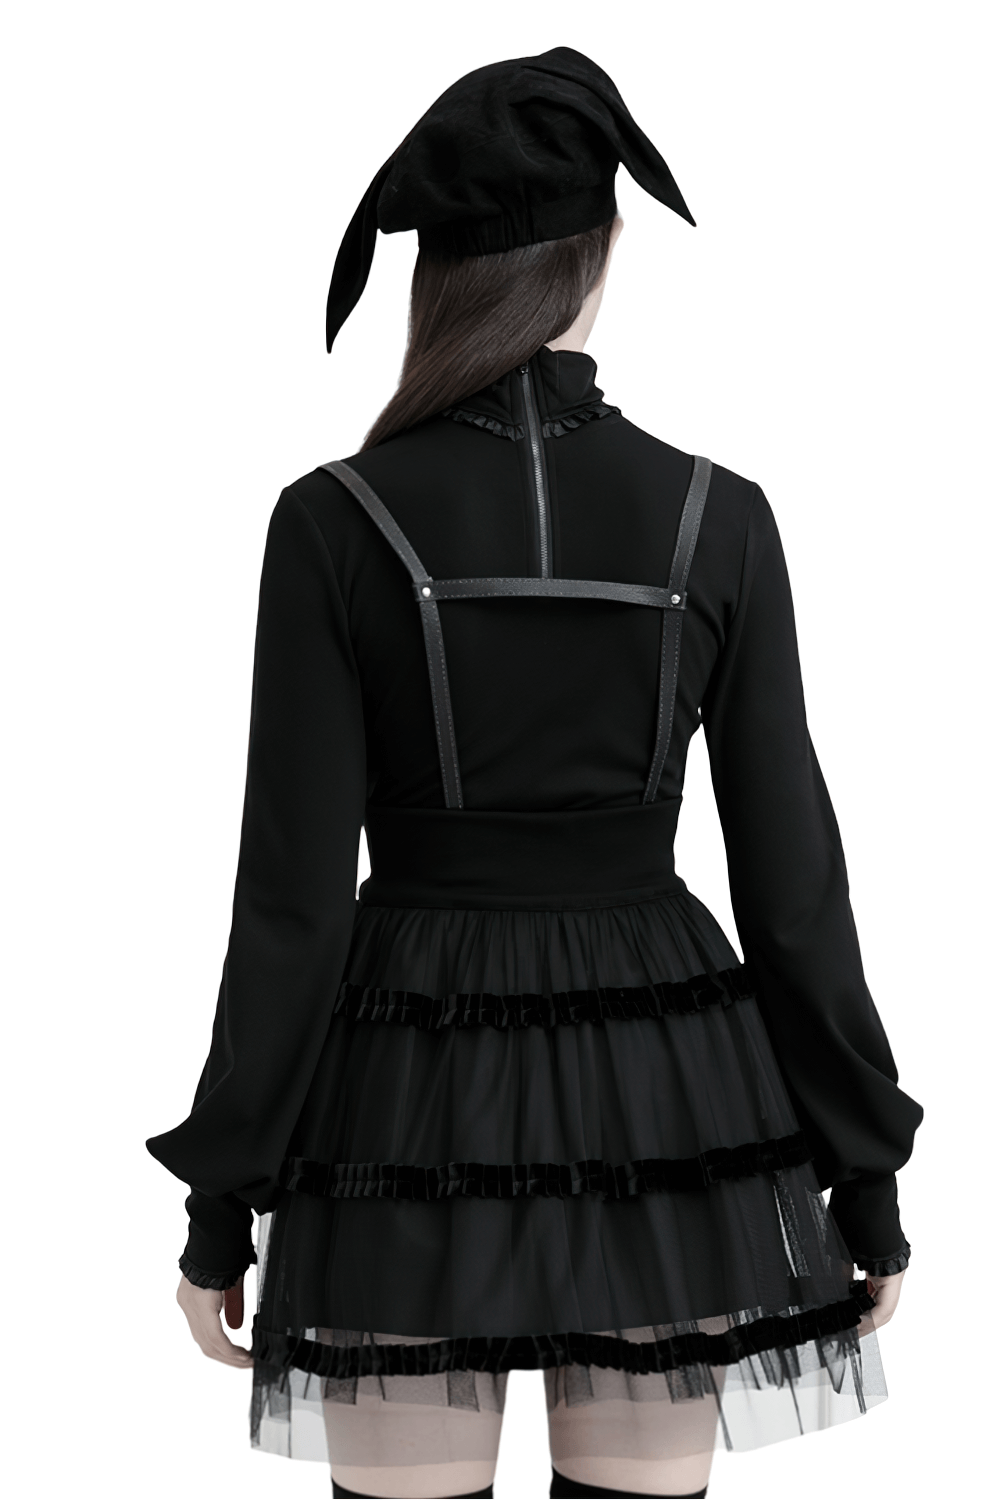 Stylish Punk Rave Black Gothic Magic Doll Skirt